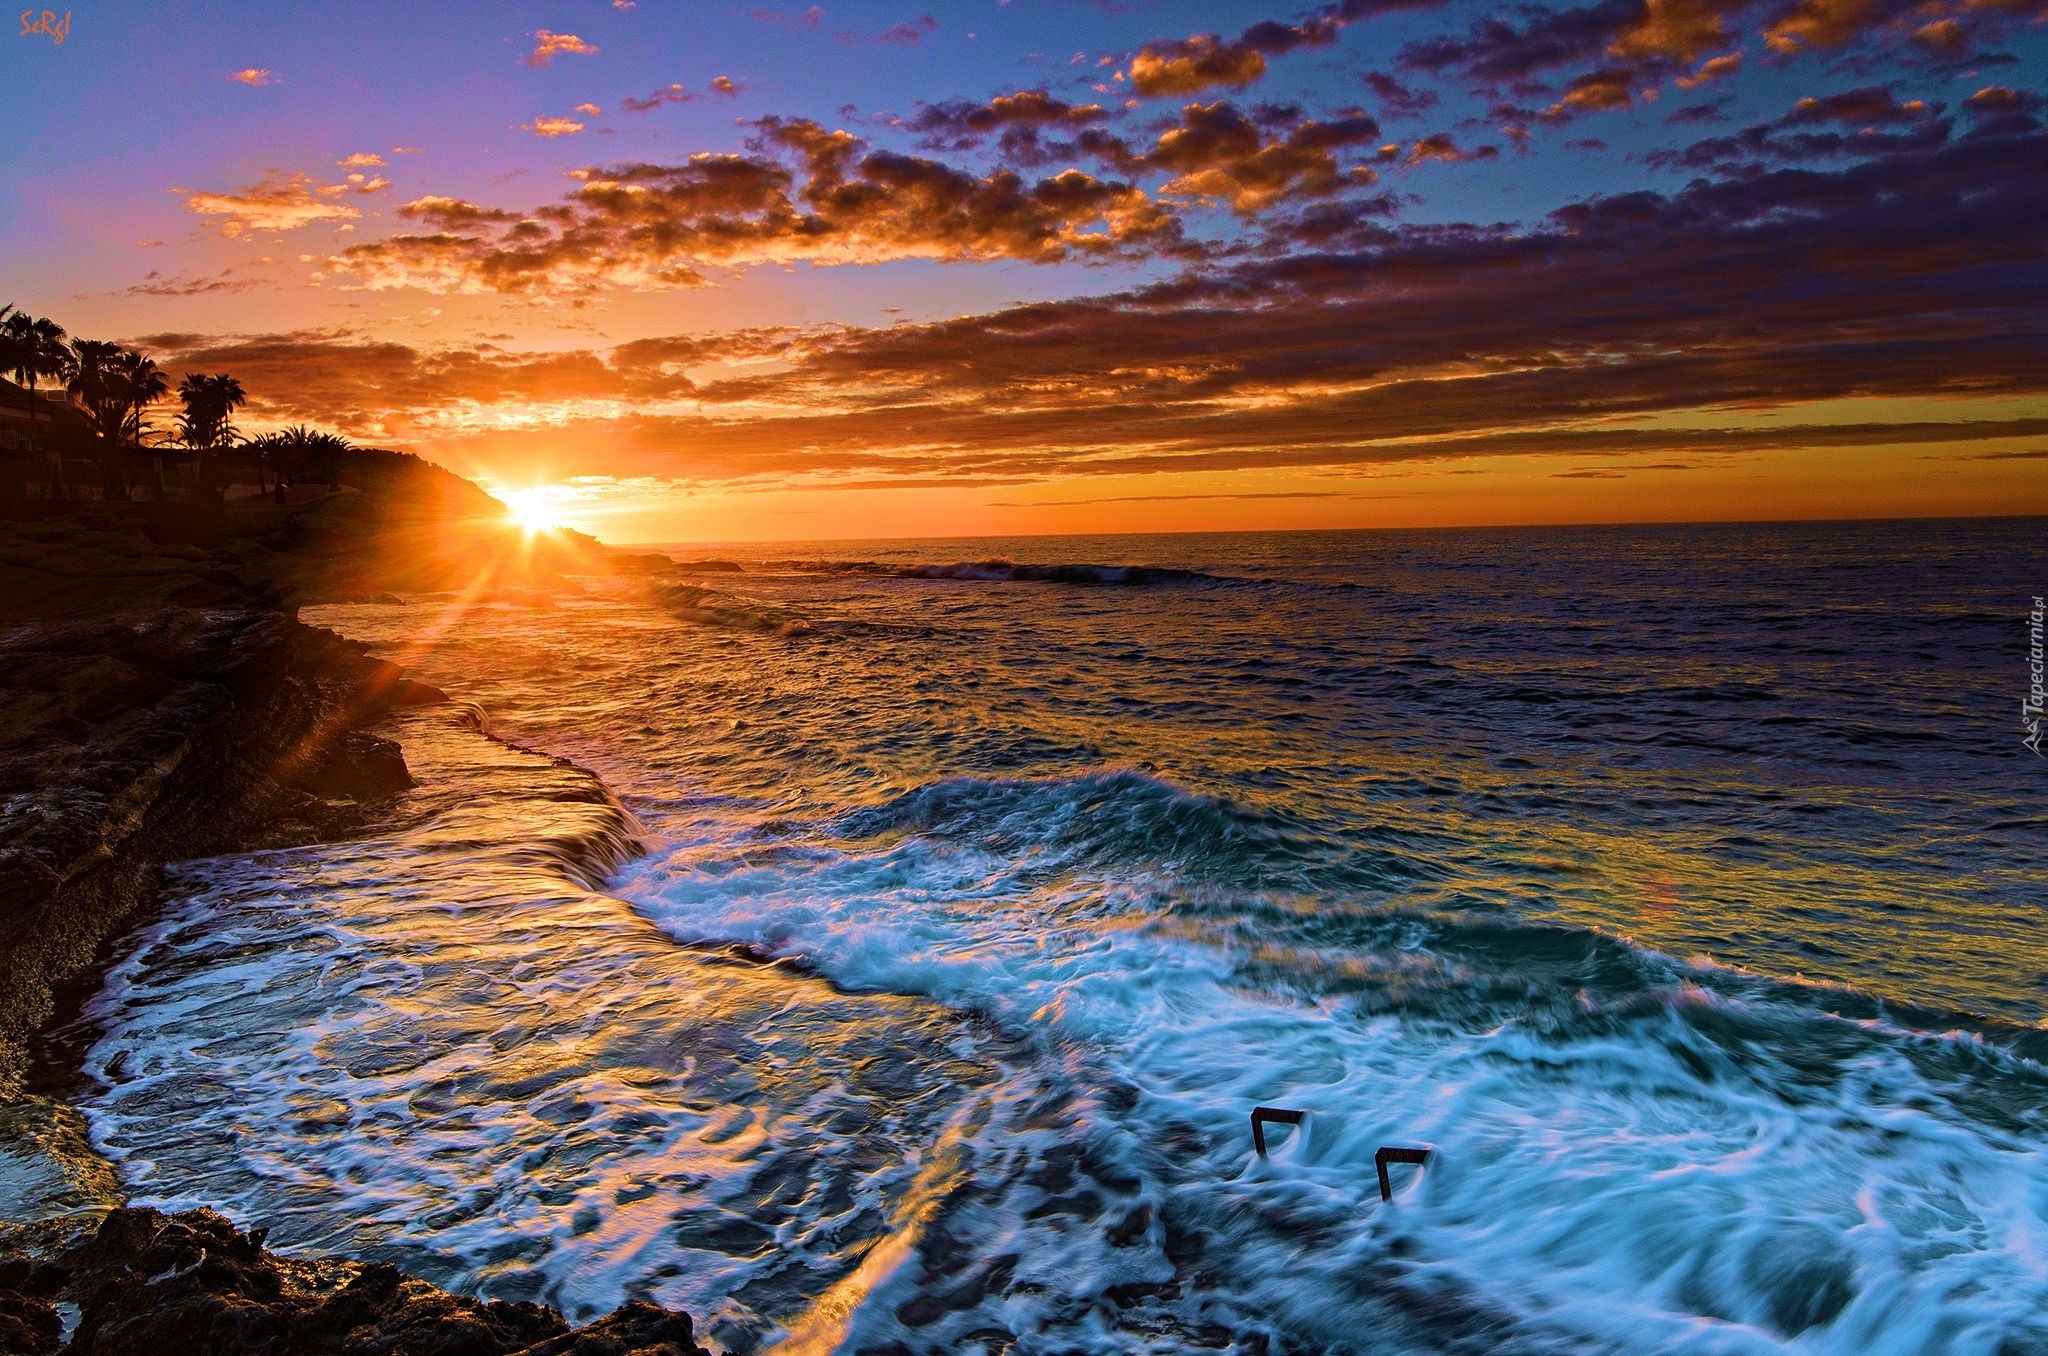 Красивые фотки моря. Сансет Бич закат. Закат на море. Рассвет на море. Красивое море.